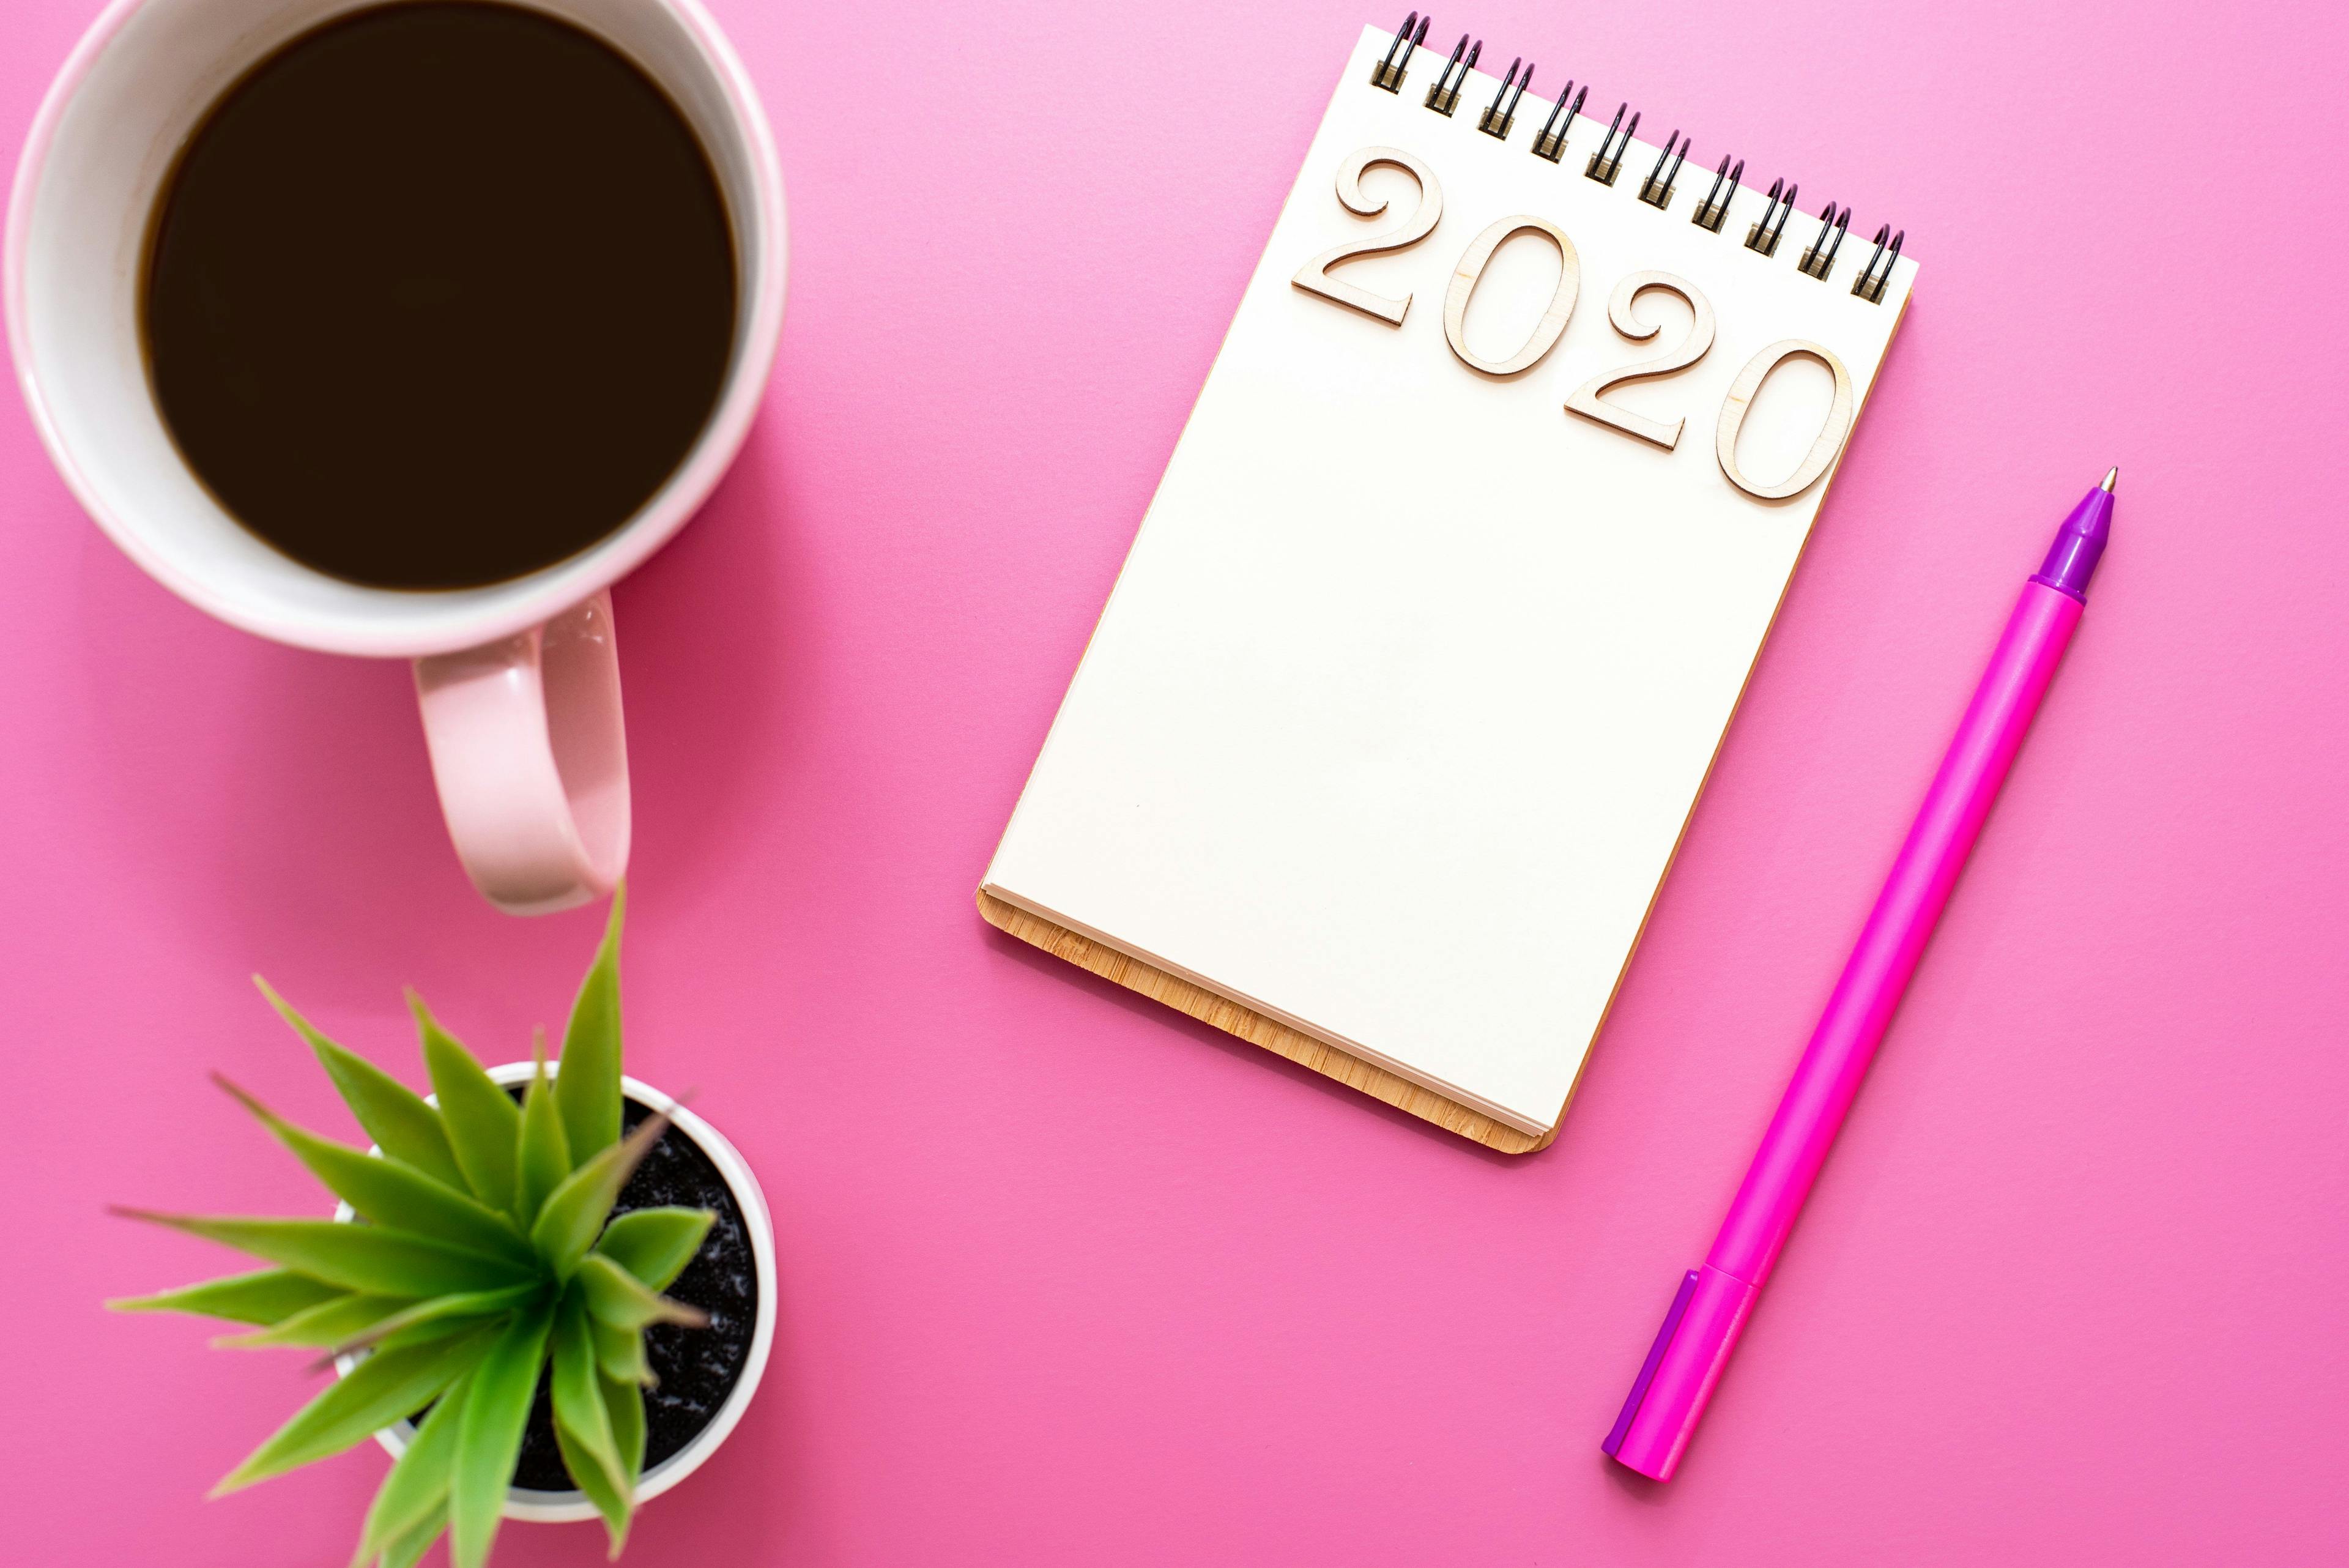 practice goals, management, 2020 planning, reflection